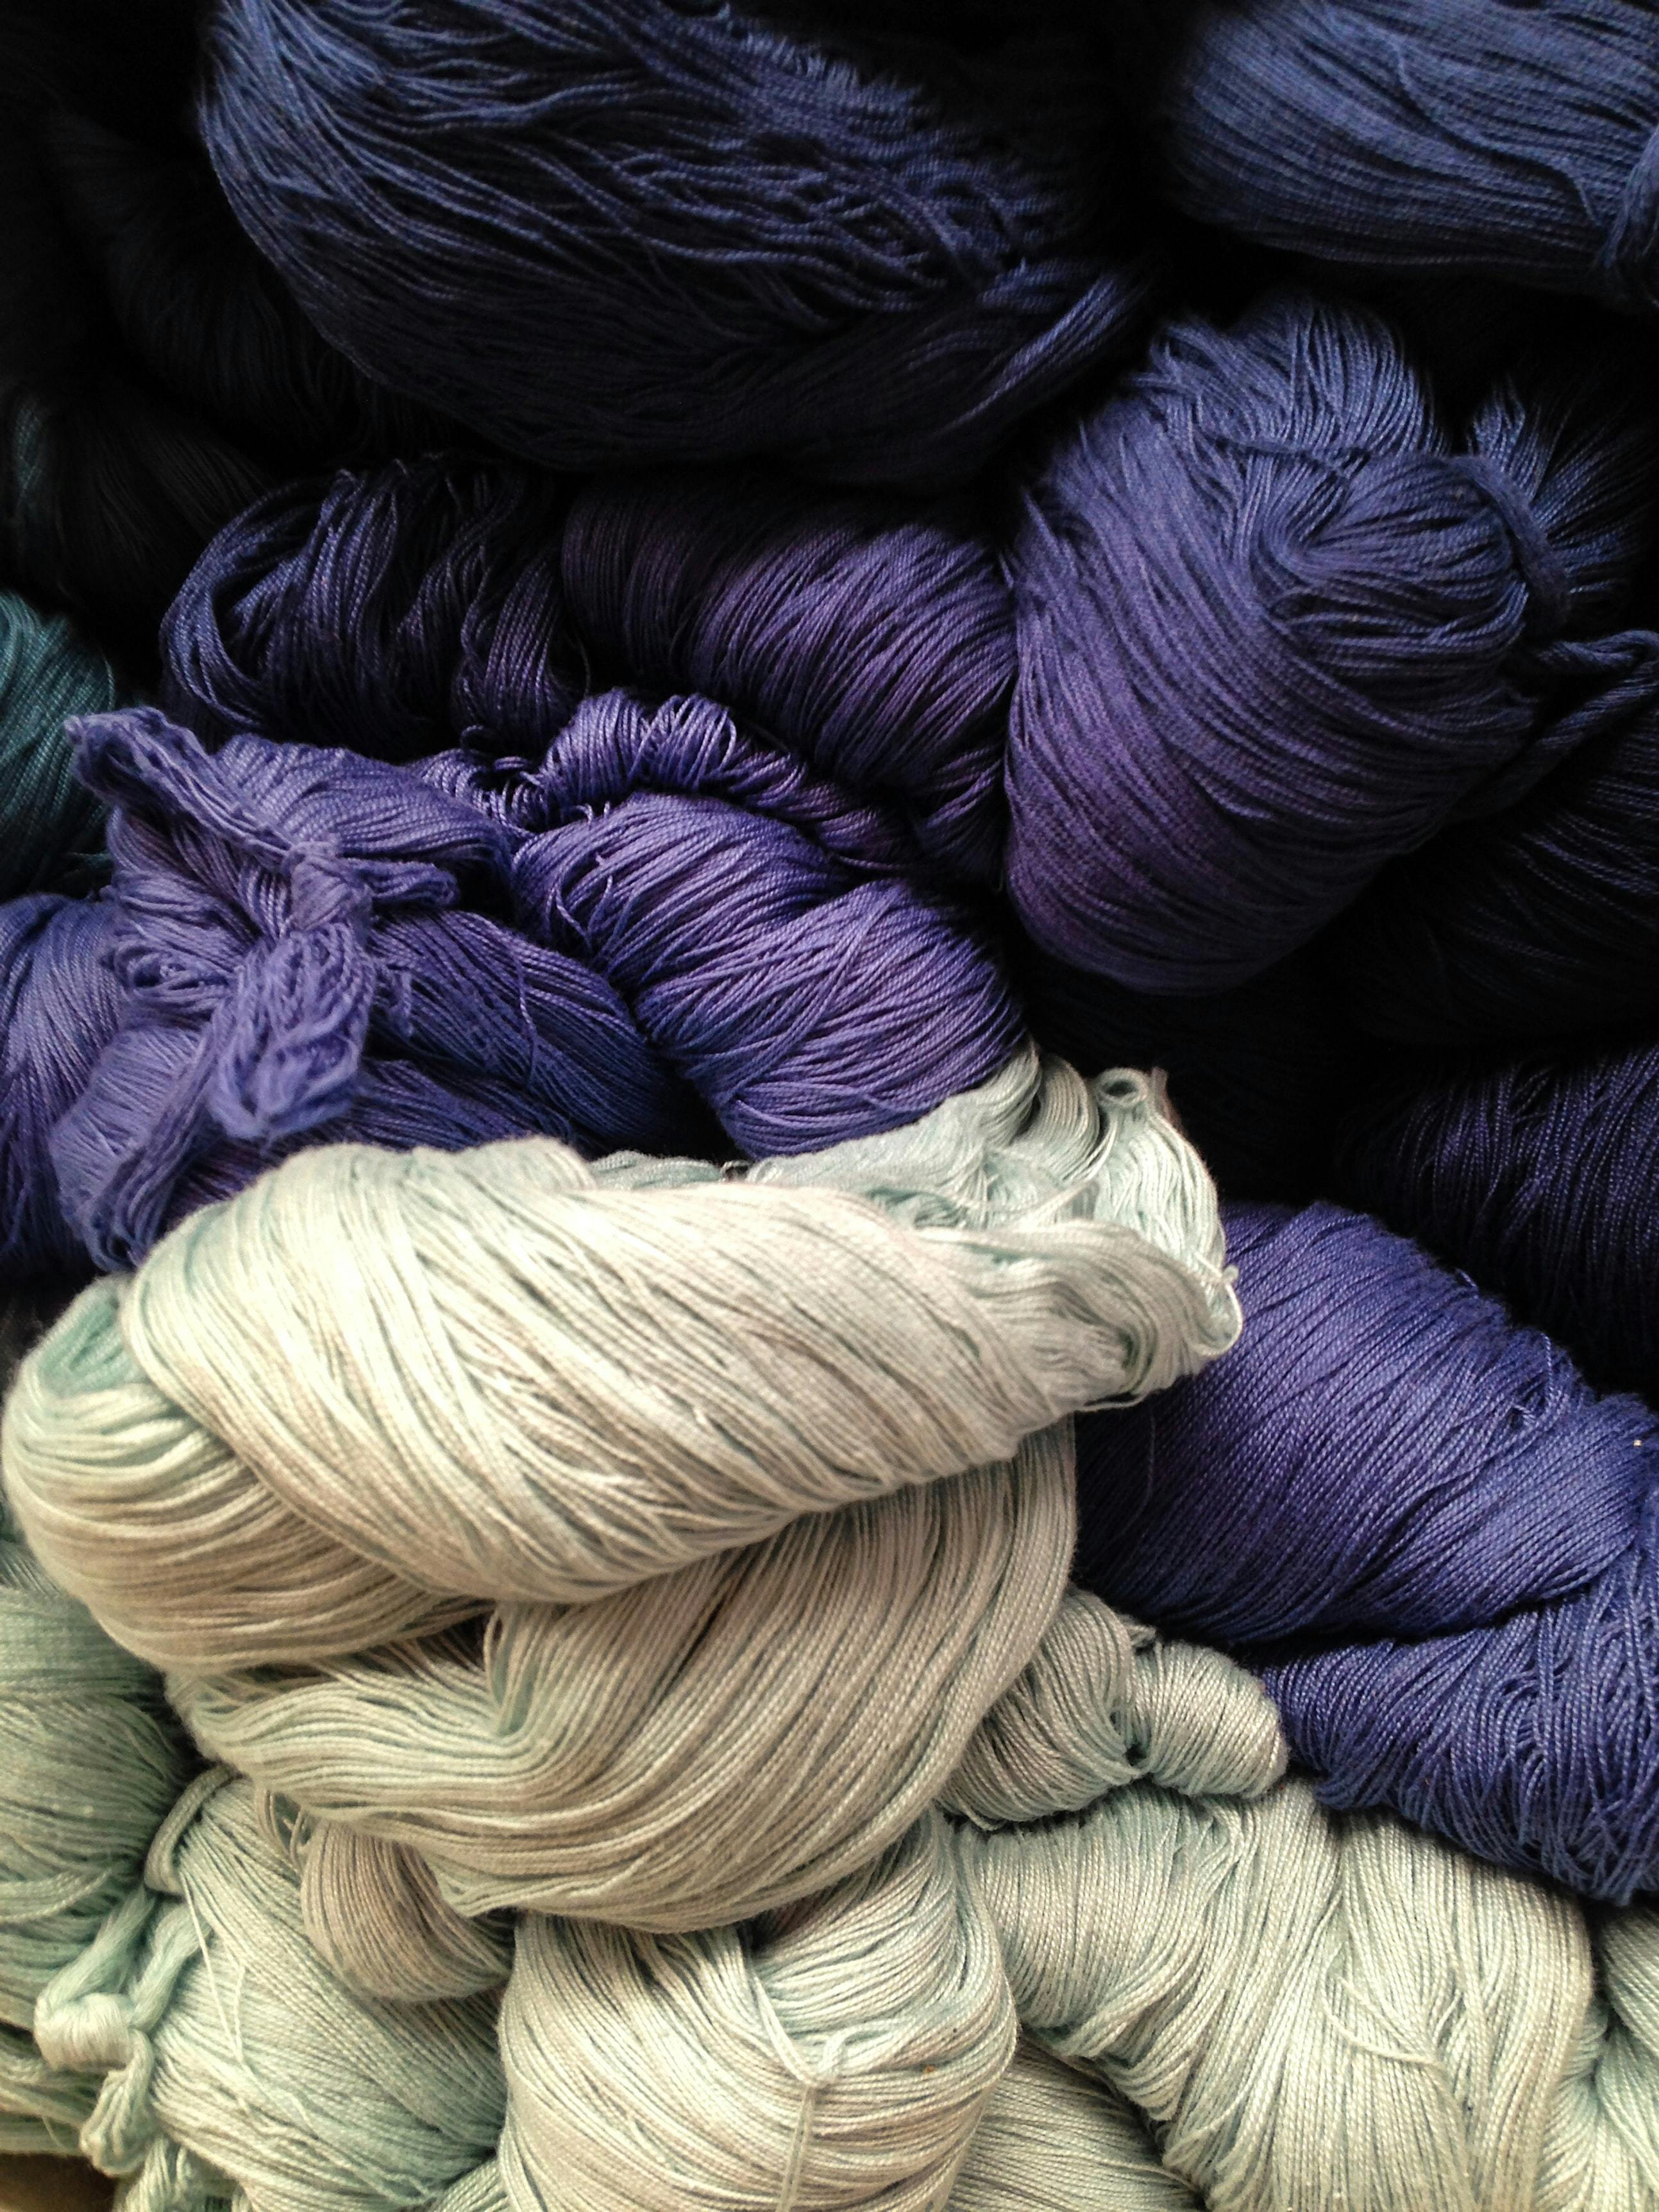 Purple and grey yarn